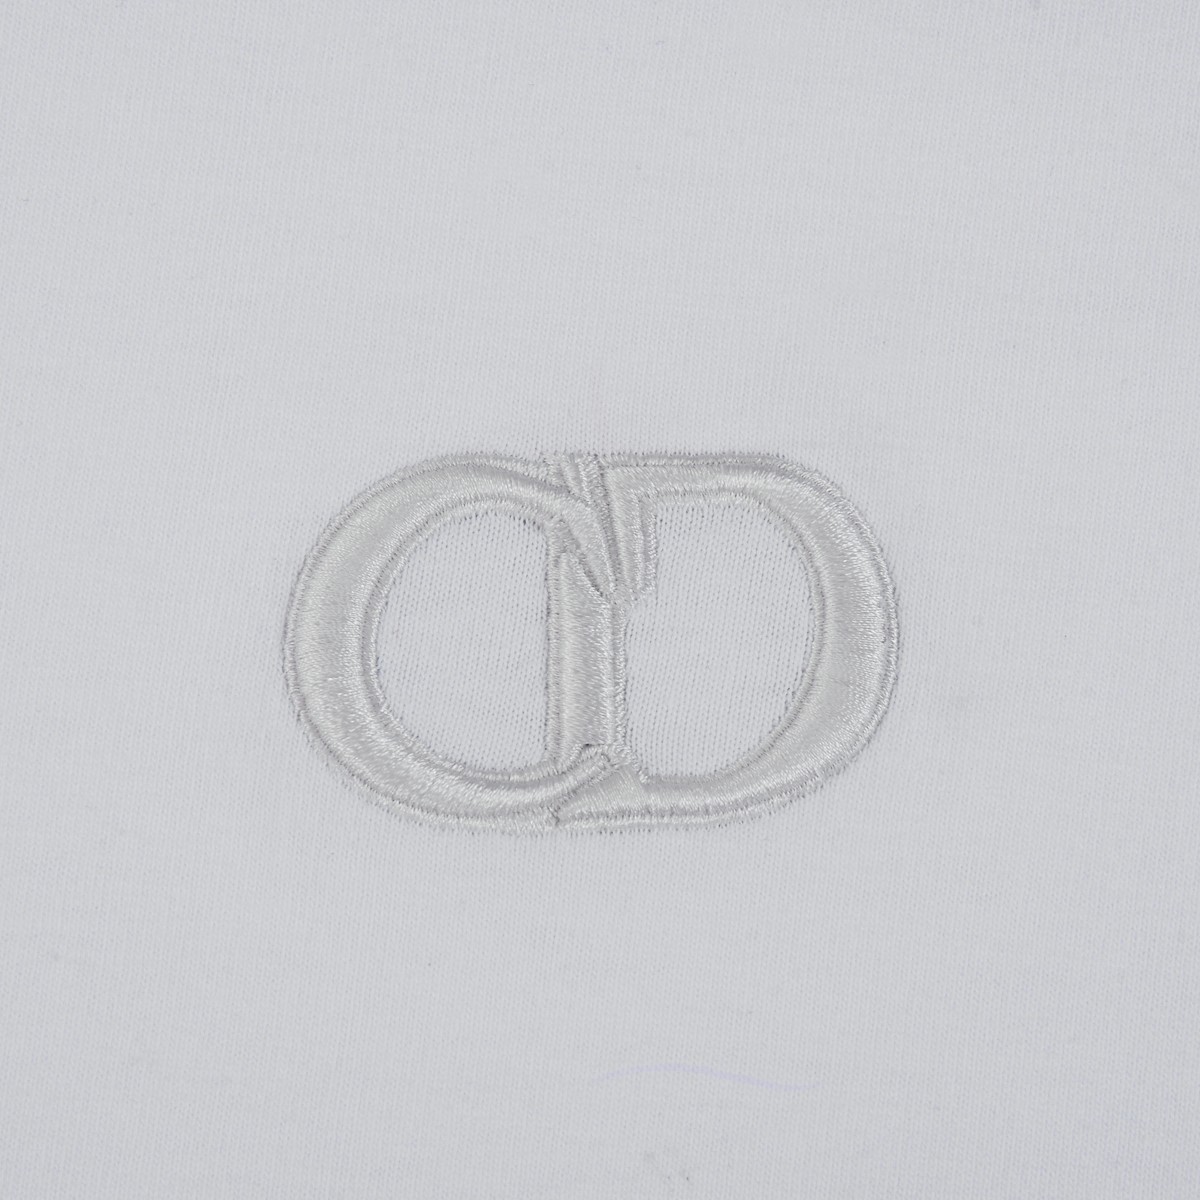 Dior CD Icon T-Shirt - DesignerGu